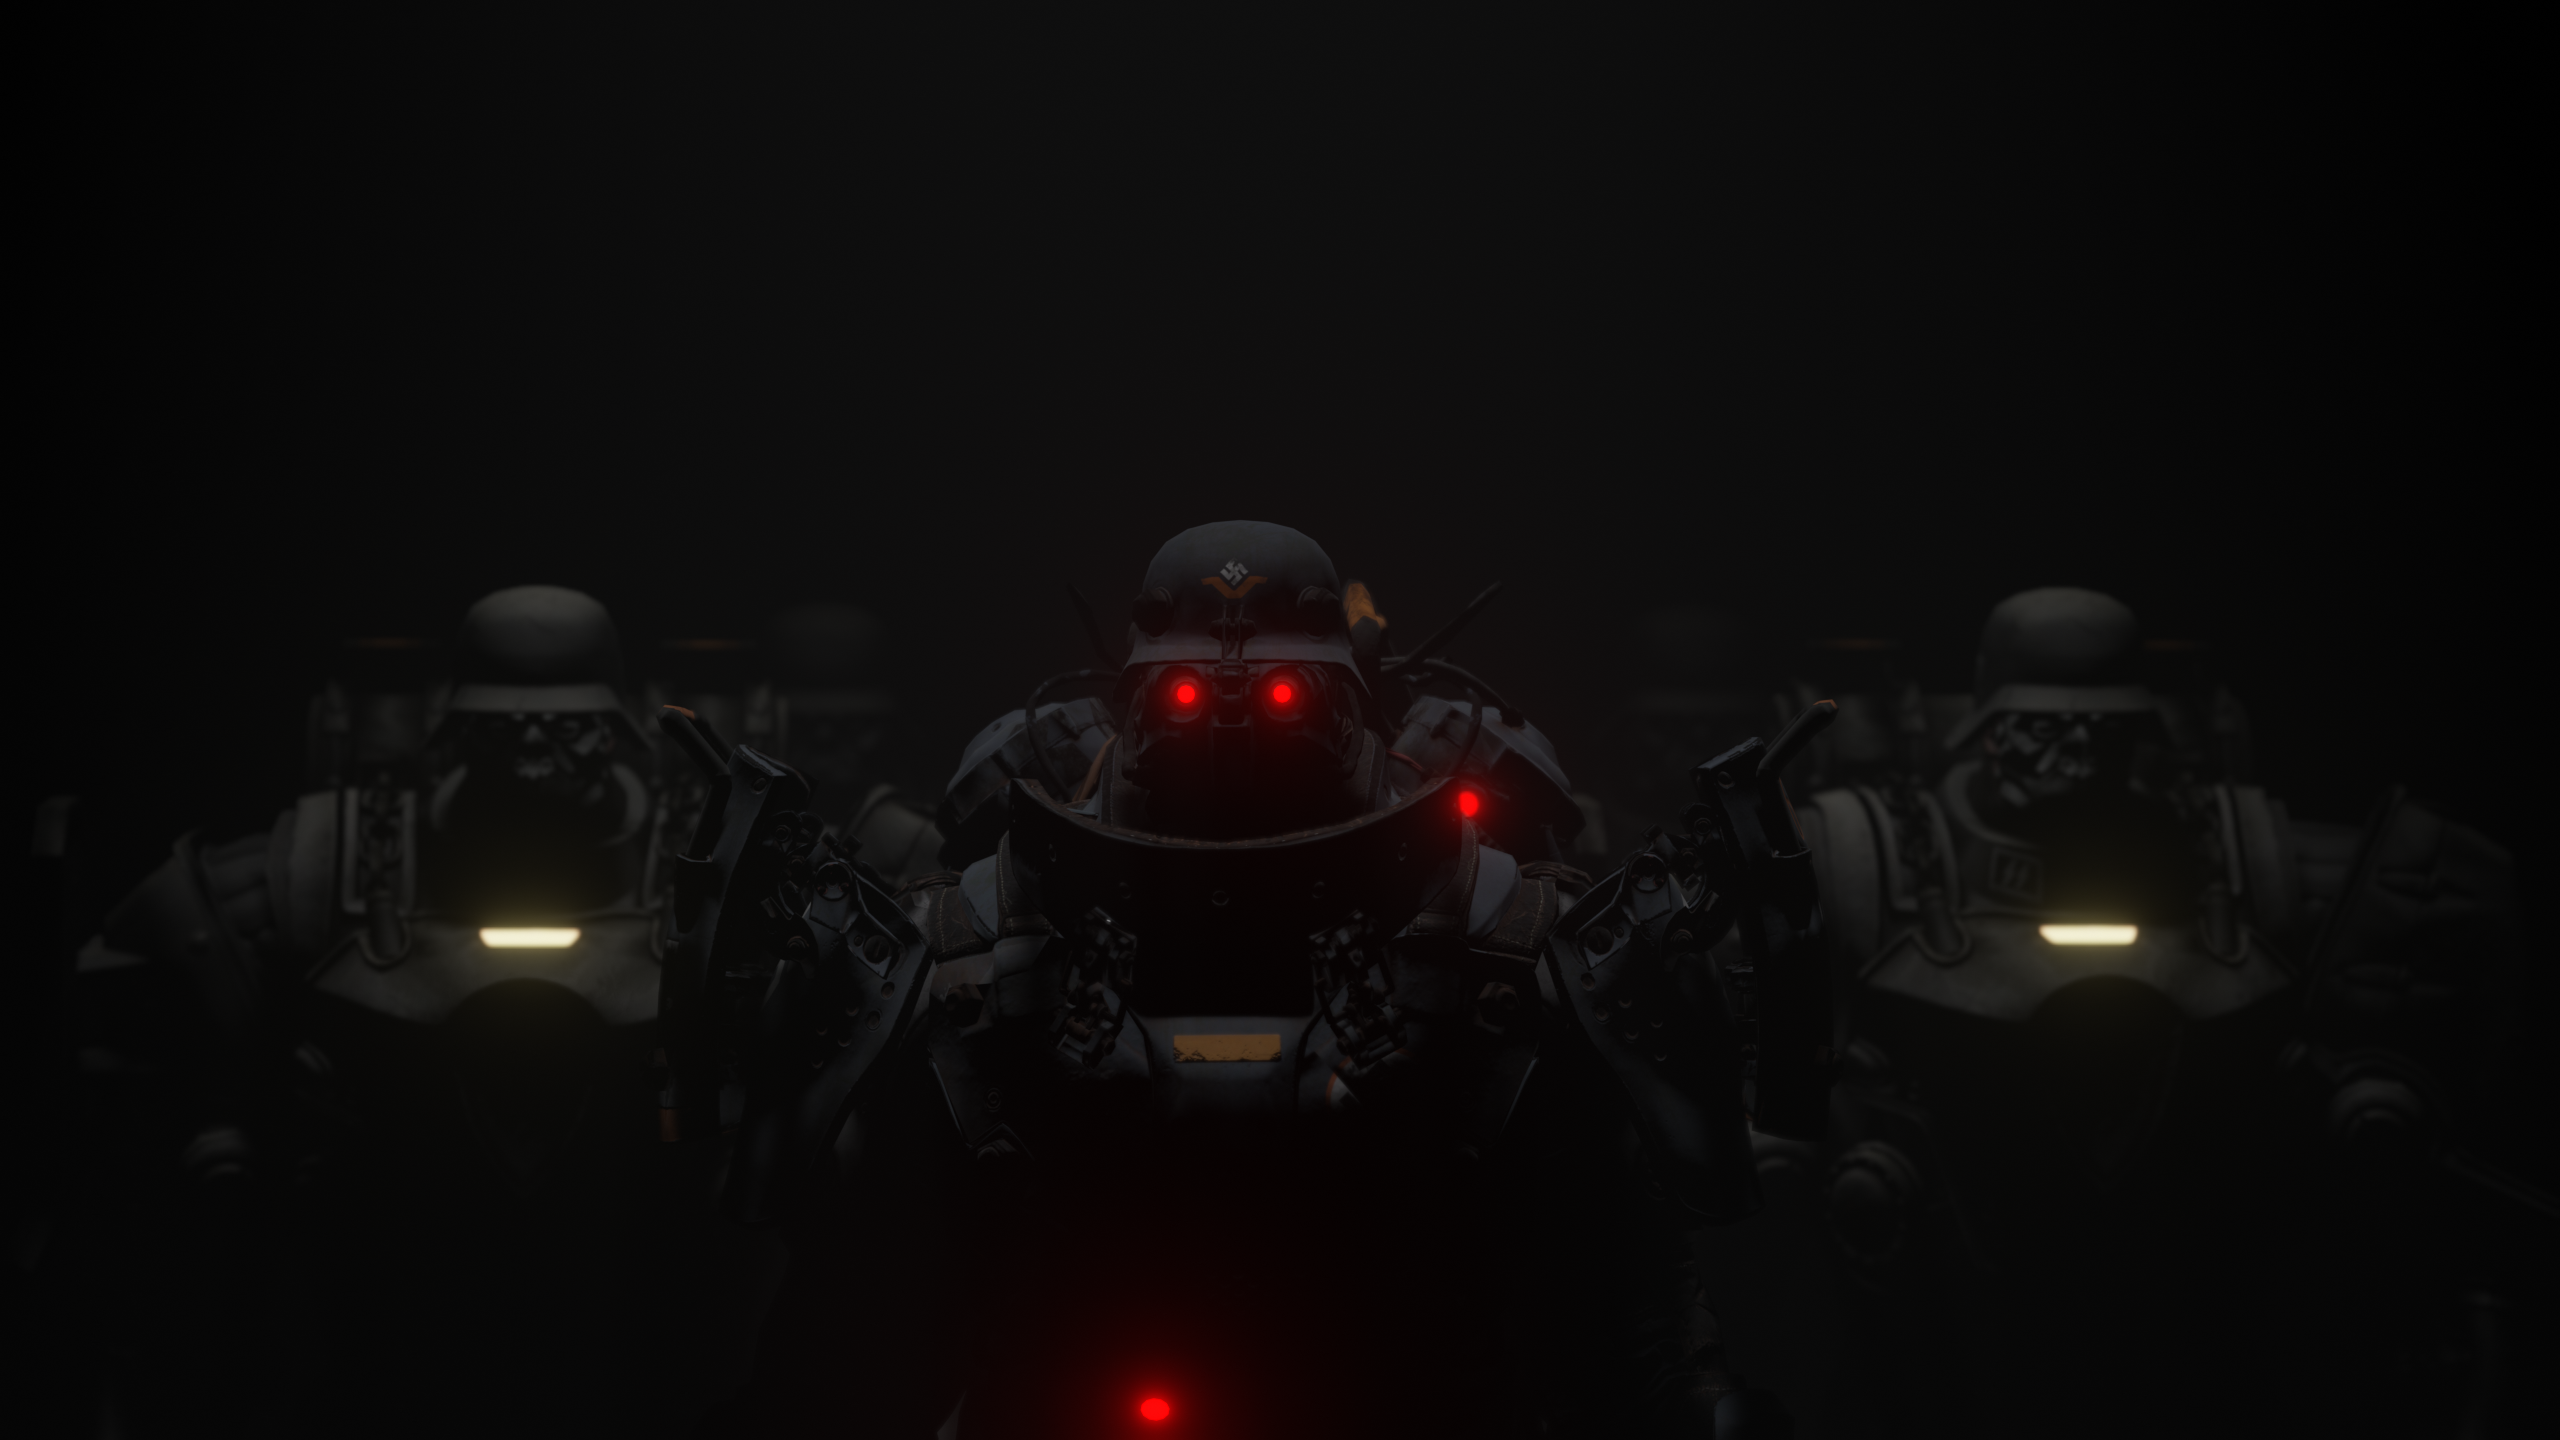 General 2560x1440 Wolfenstein lights soldier army red light noir swastika video games PC gaming glowing eyes red eyes